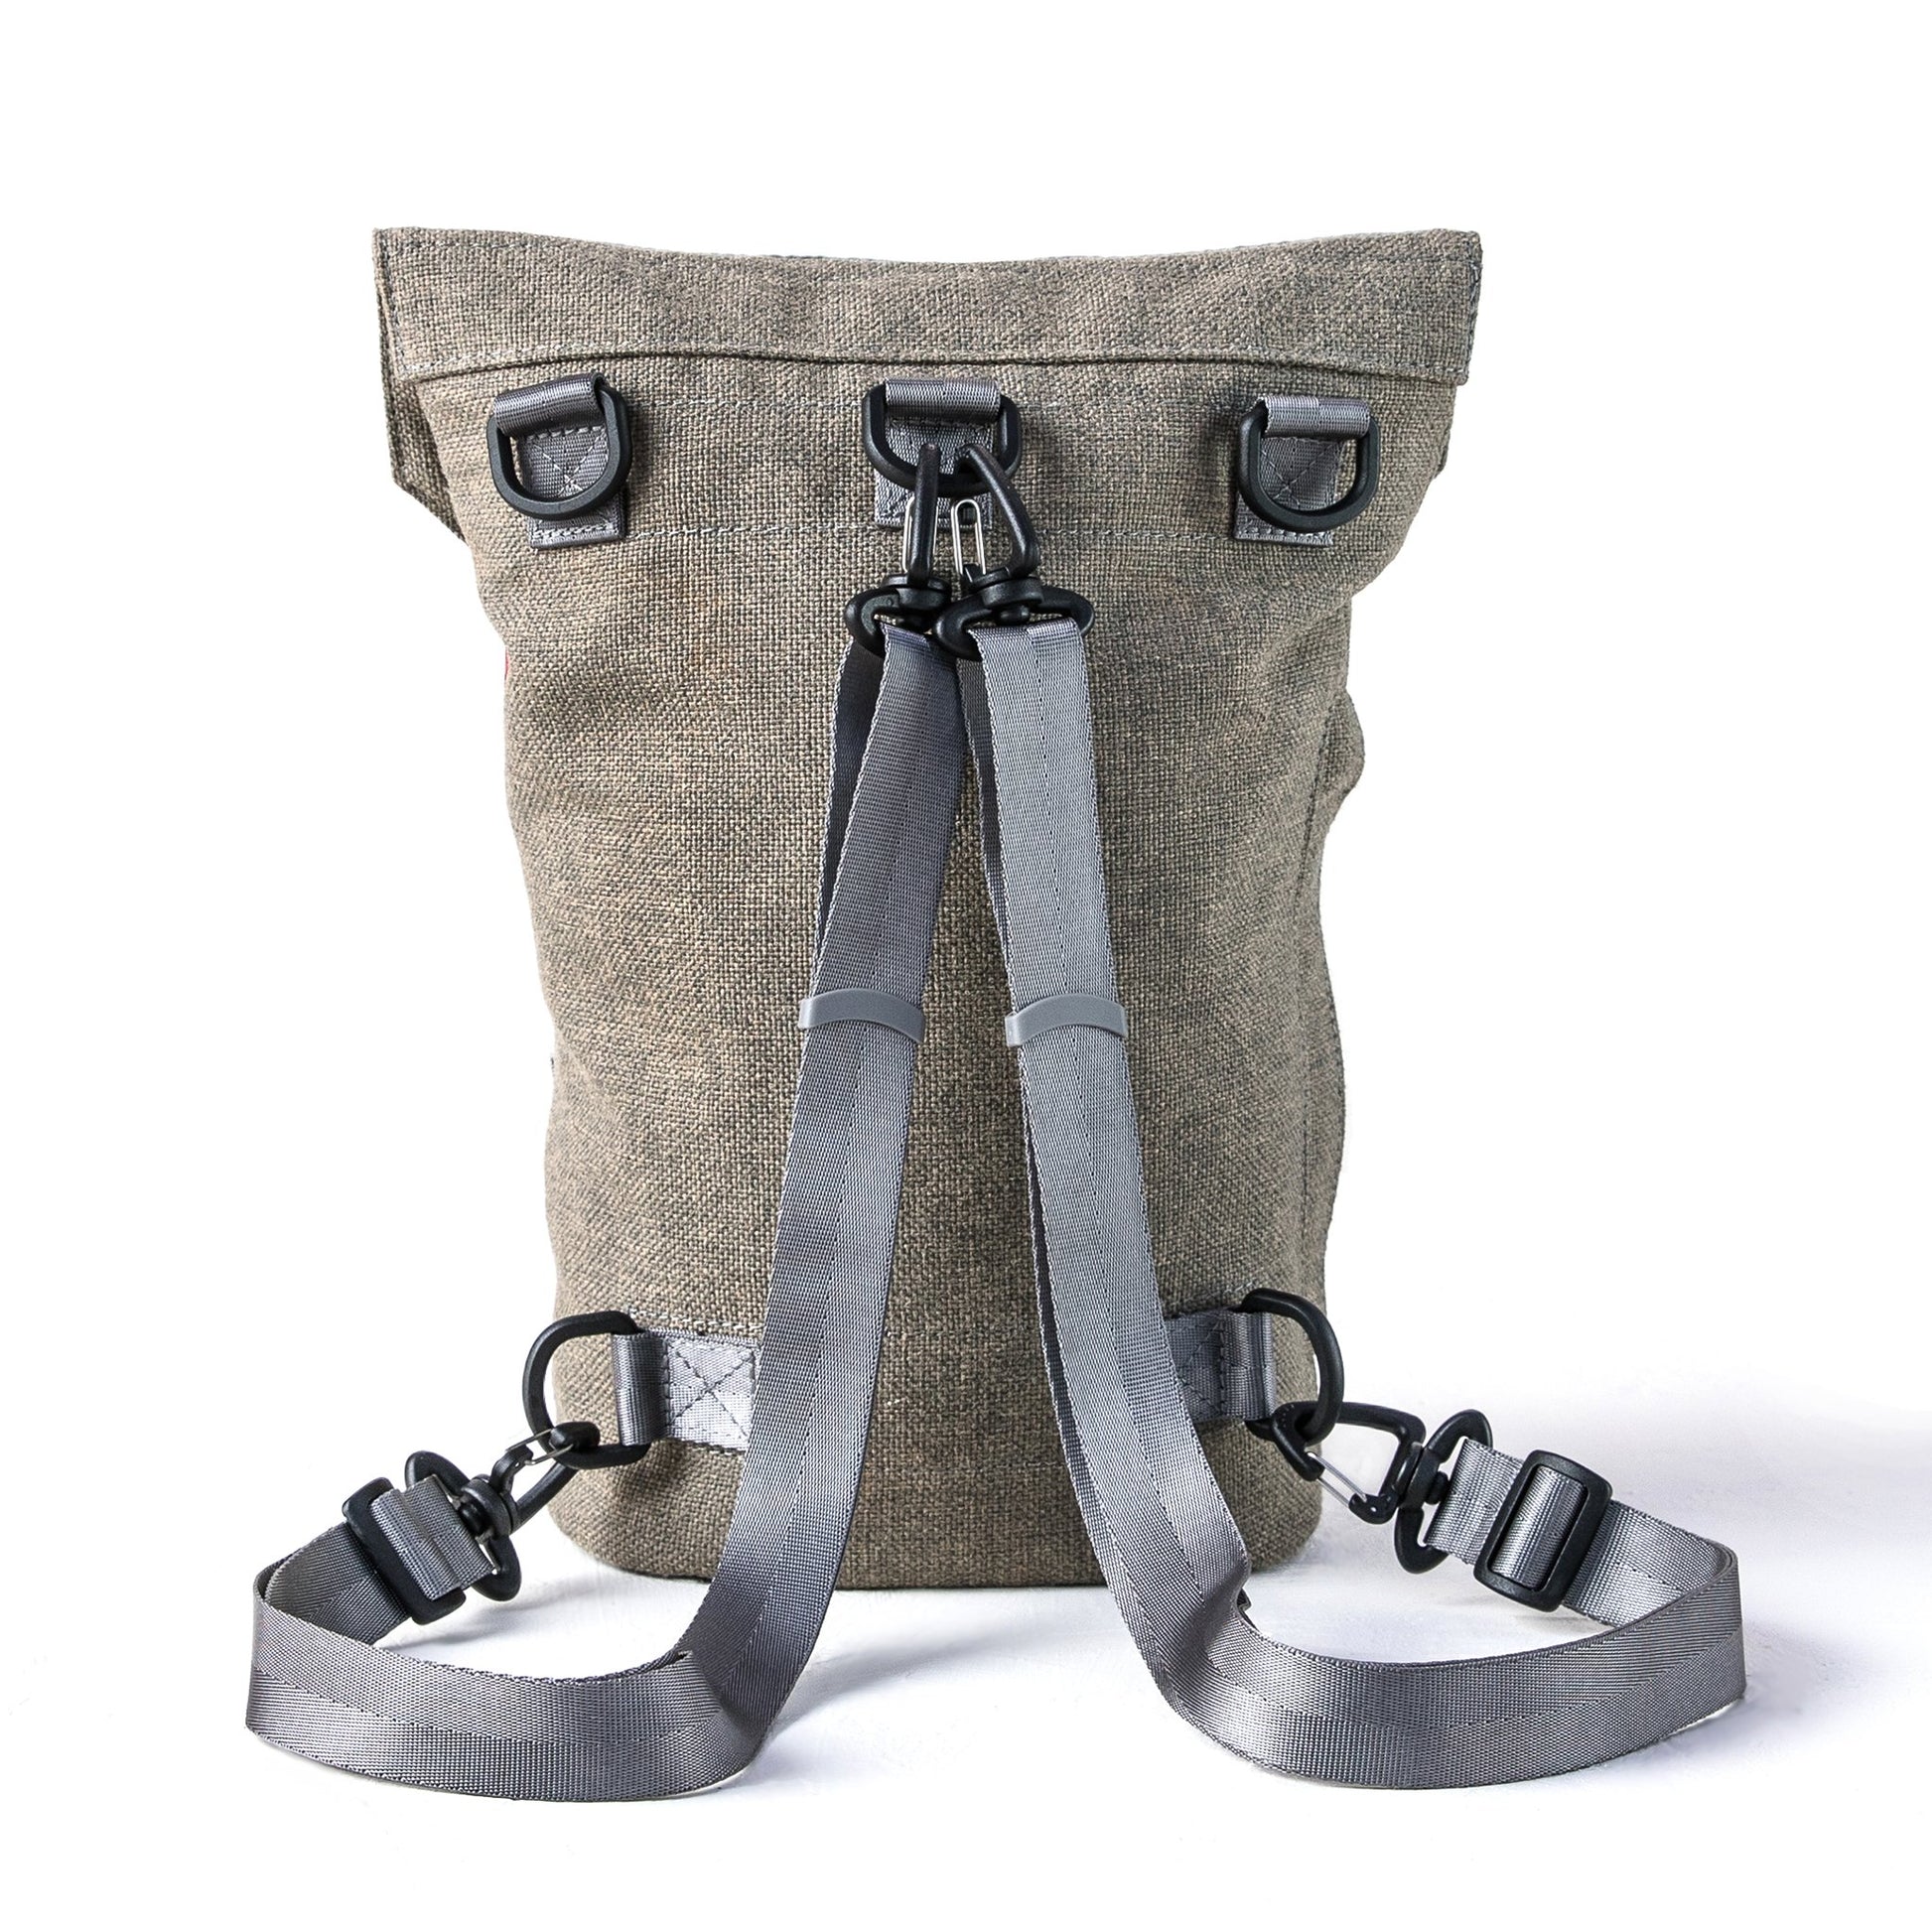 Salt Strap Review: We tried the crossbody purse strap